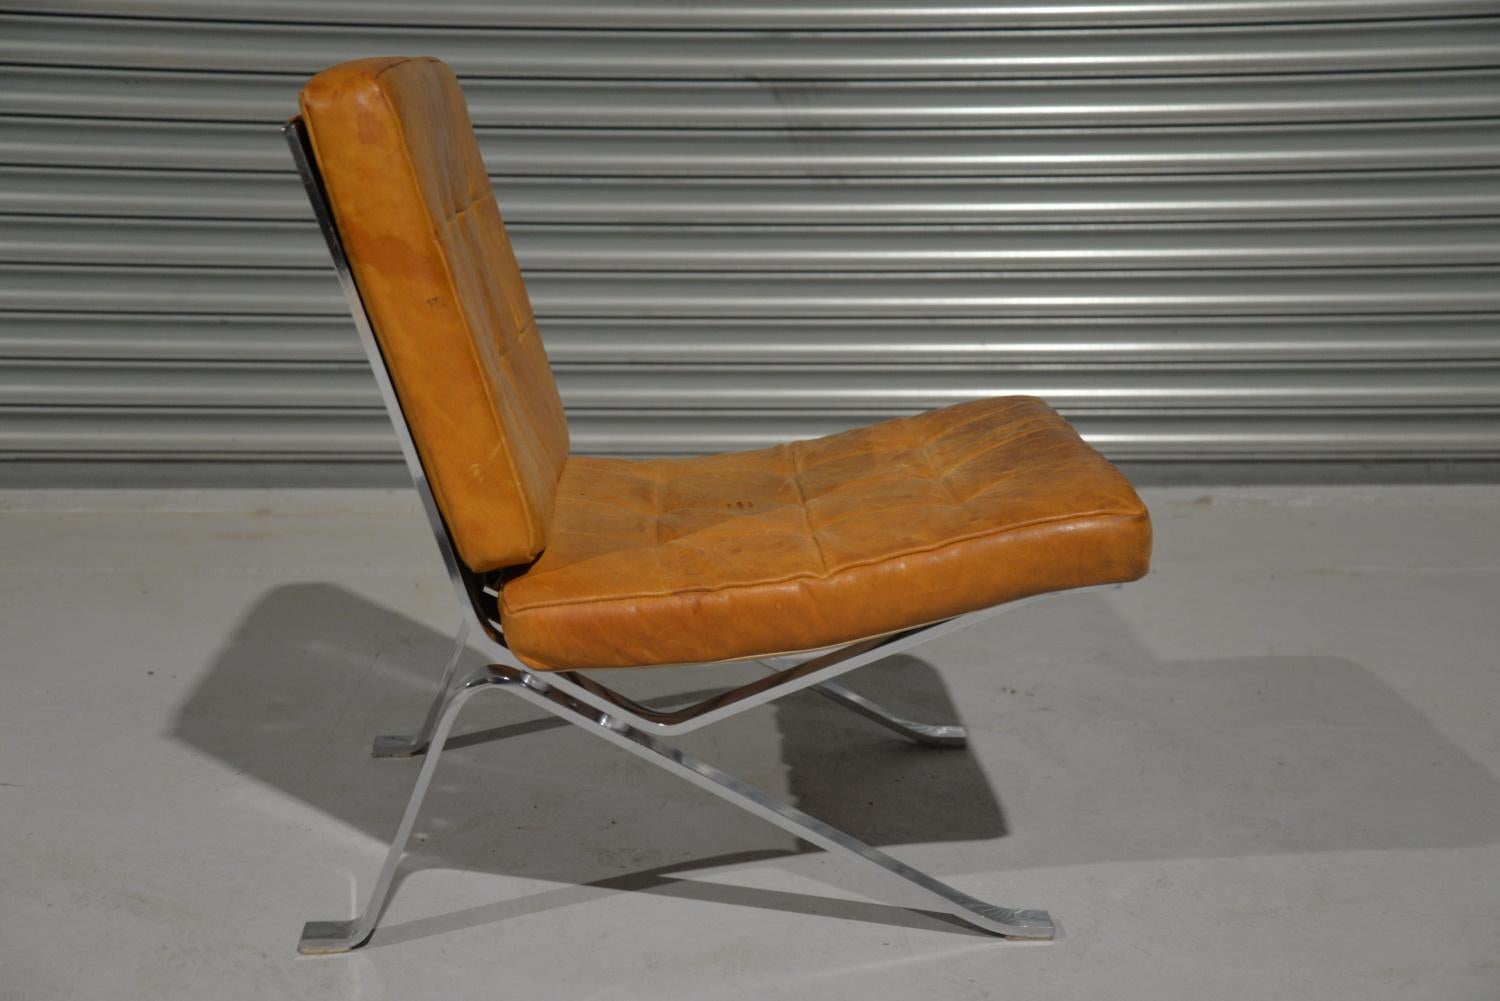 Vintage Rh-301 Lounge Chair by Robert Haussmann for De Sede, Switzerland, 1954 For Sale 1